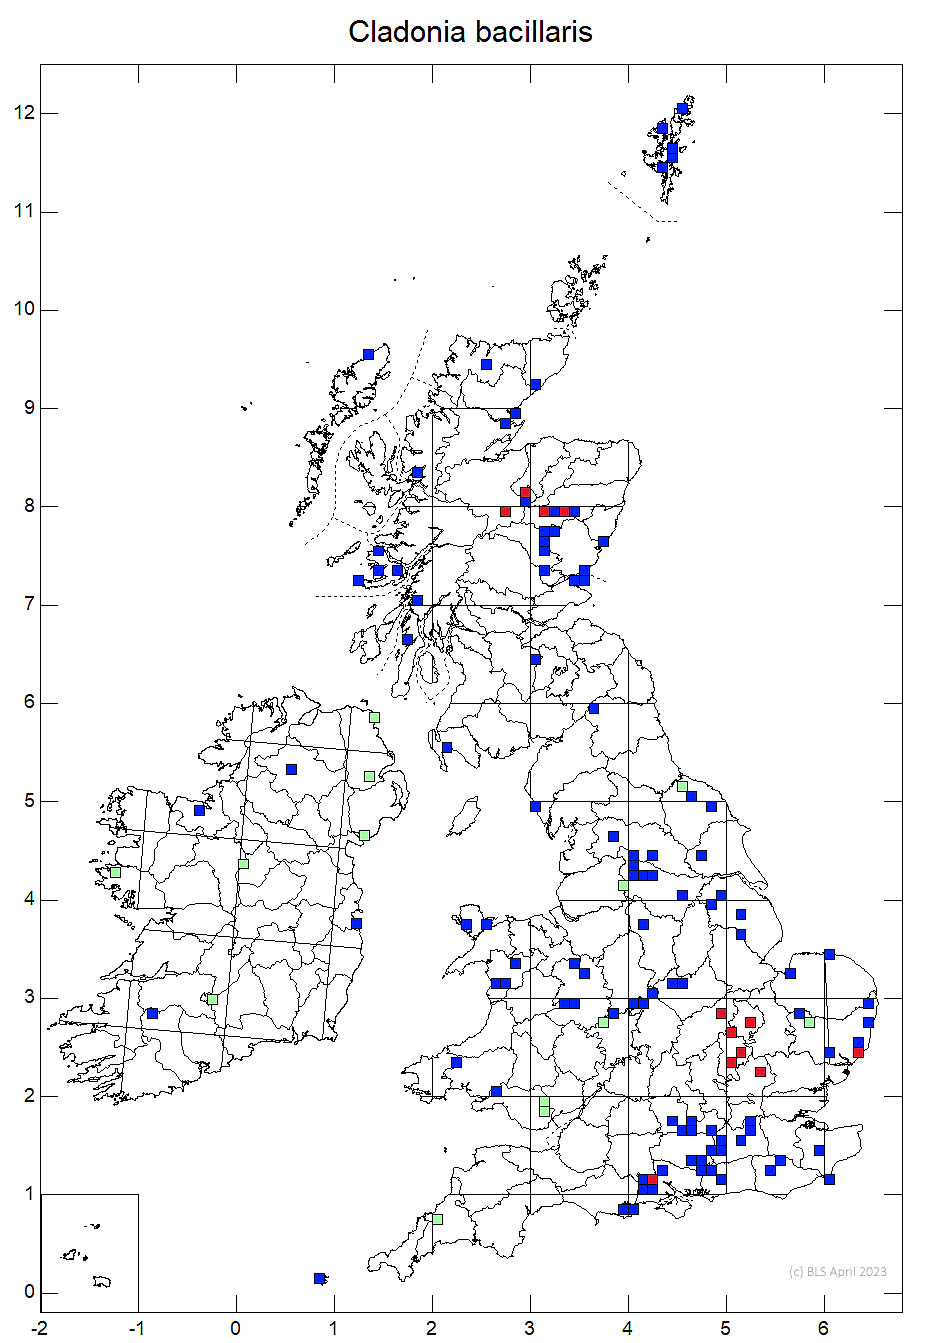 Cladonia bacillaris 10km sq distribution map